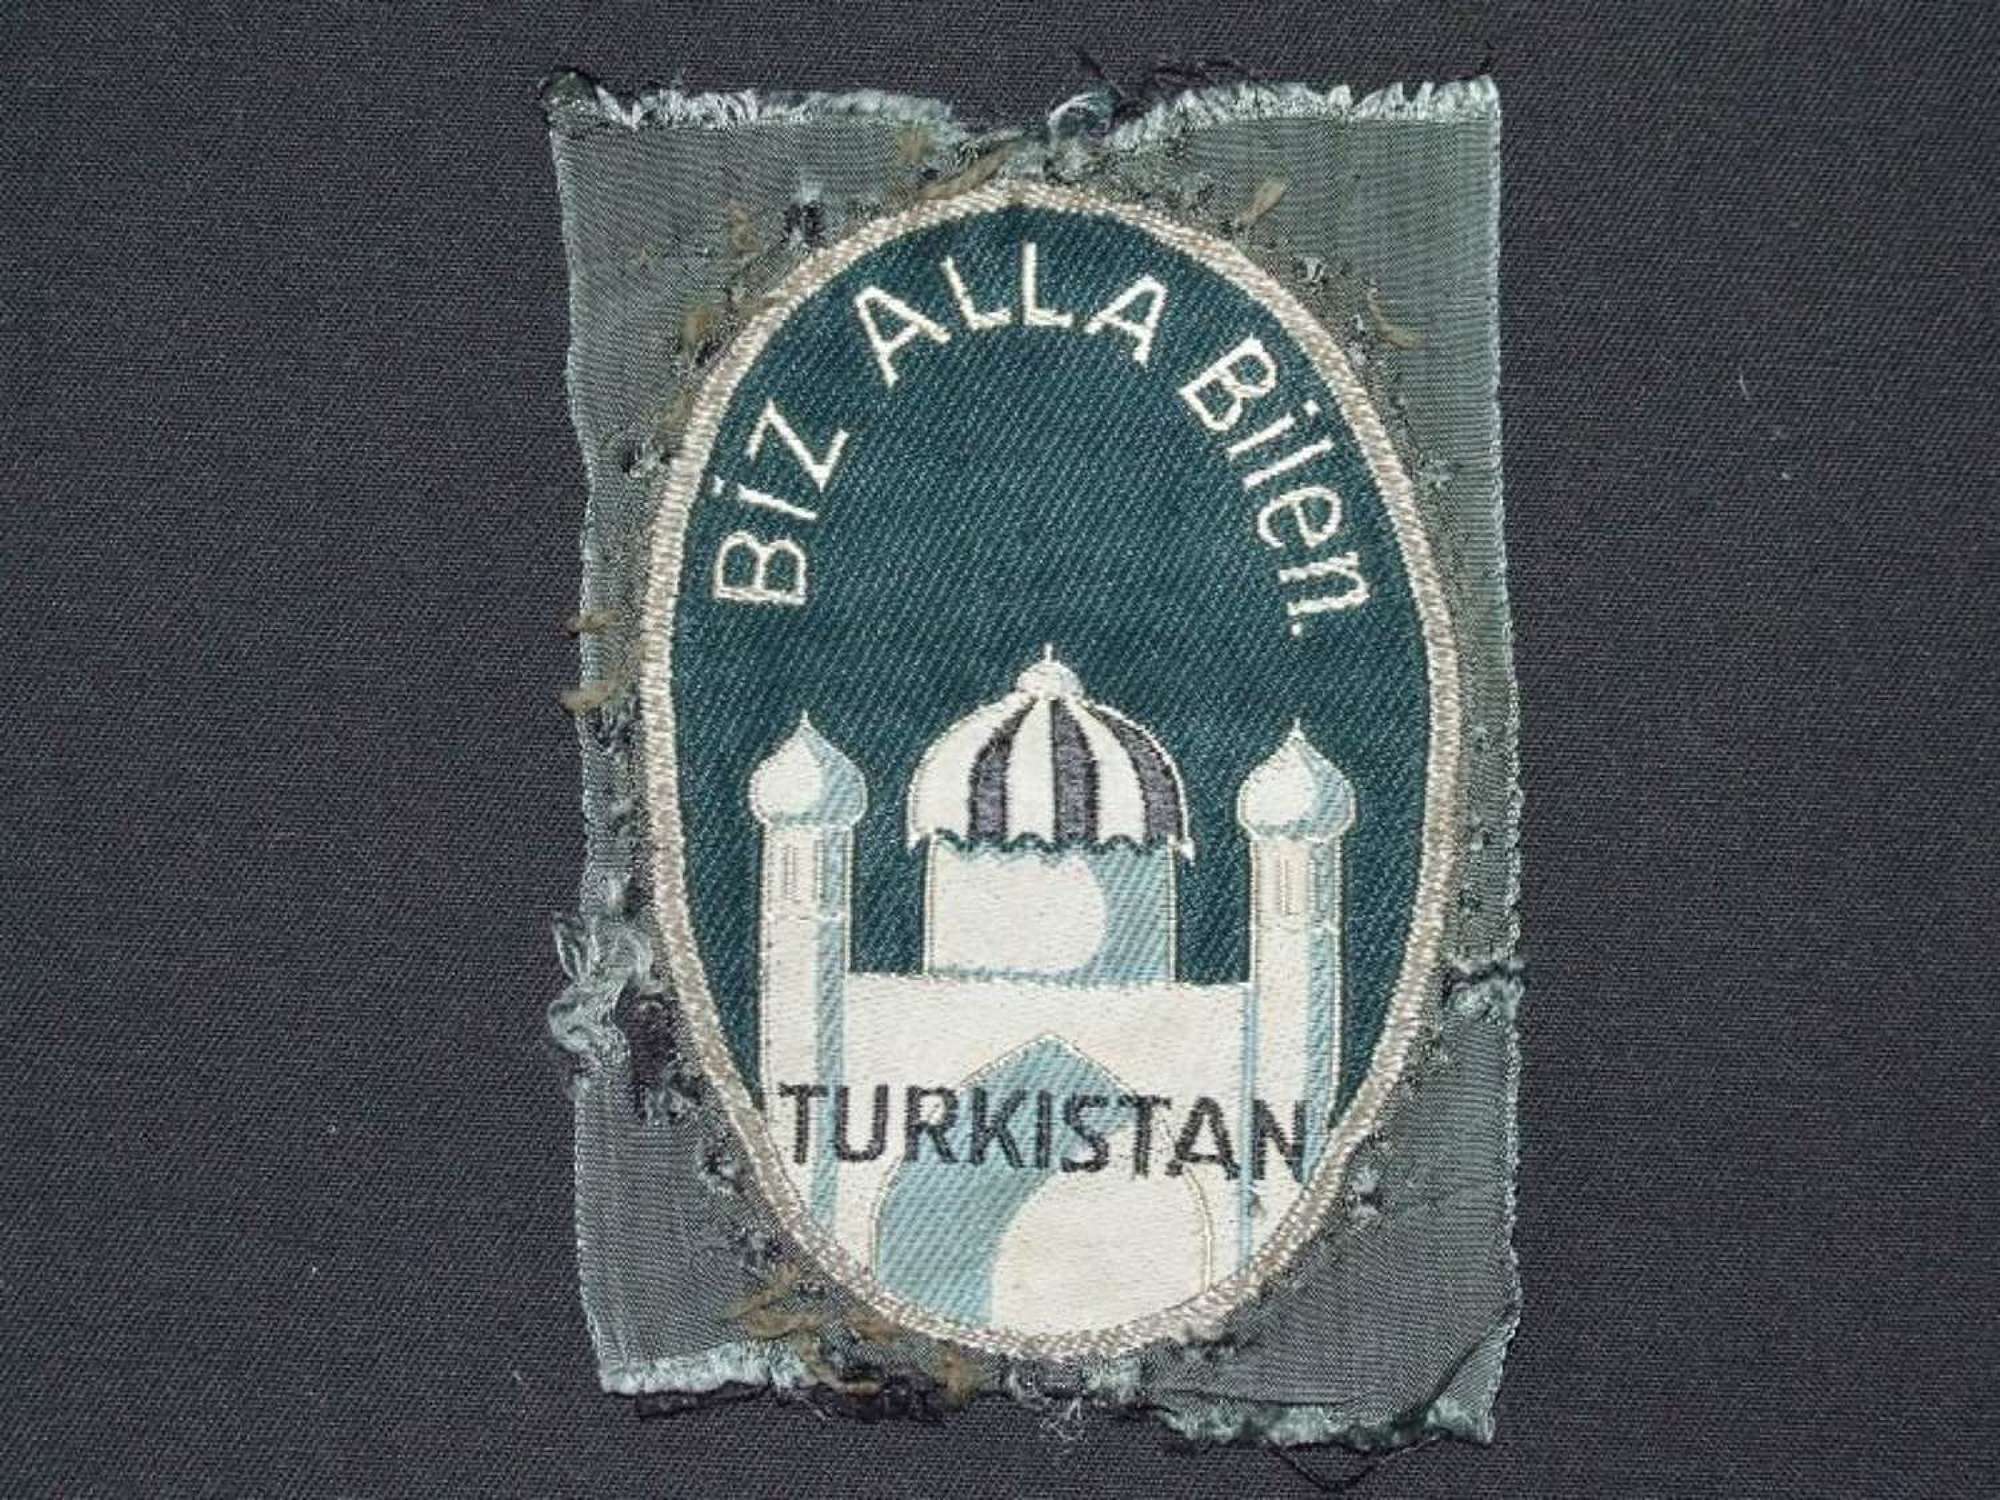 Rare 1st Pattern Sleeve Insignia for Turkistan volunteers